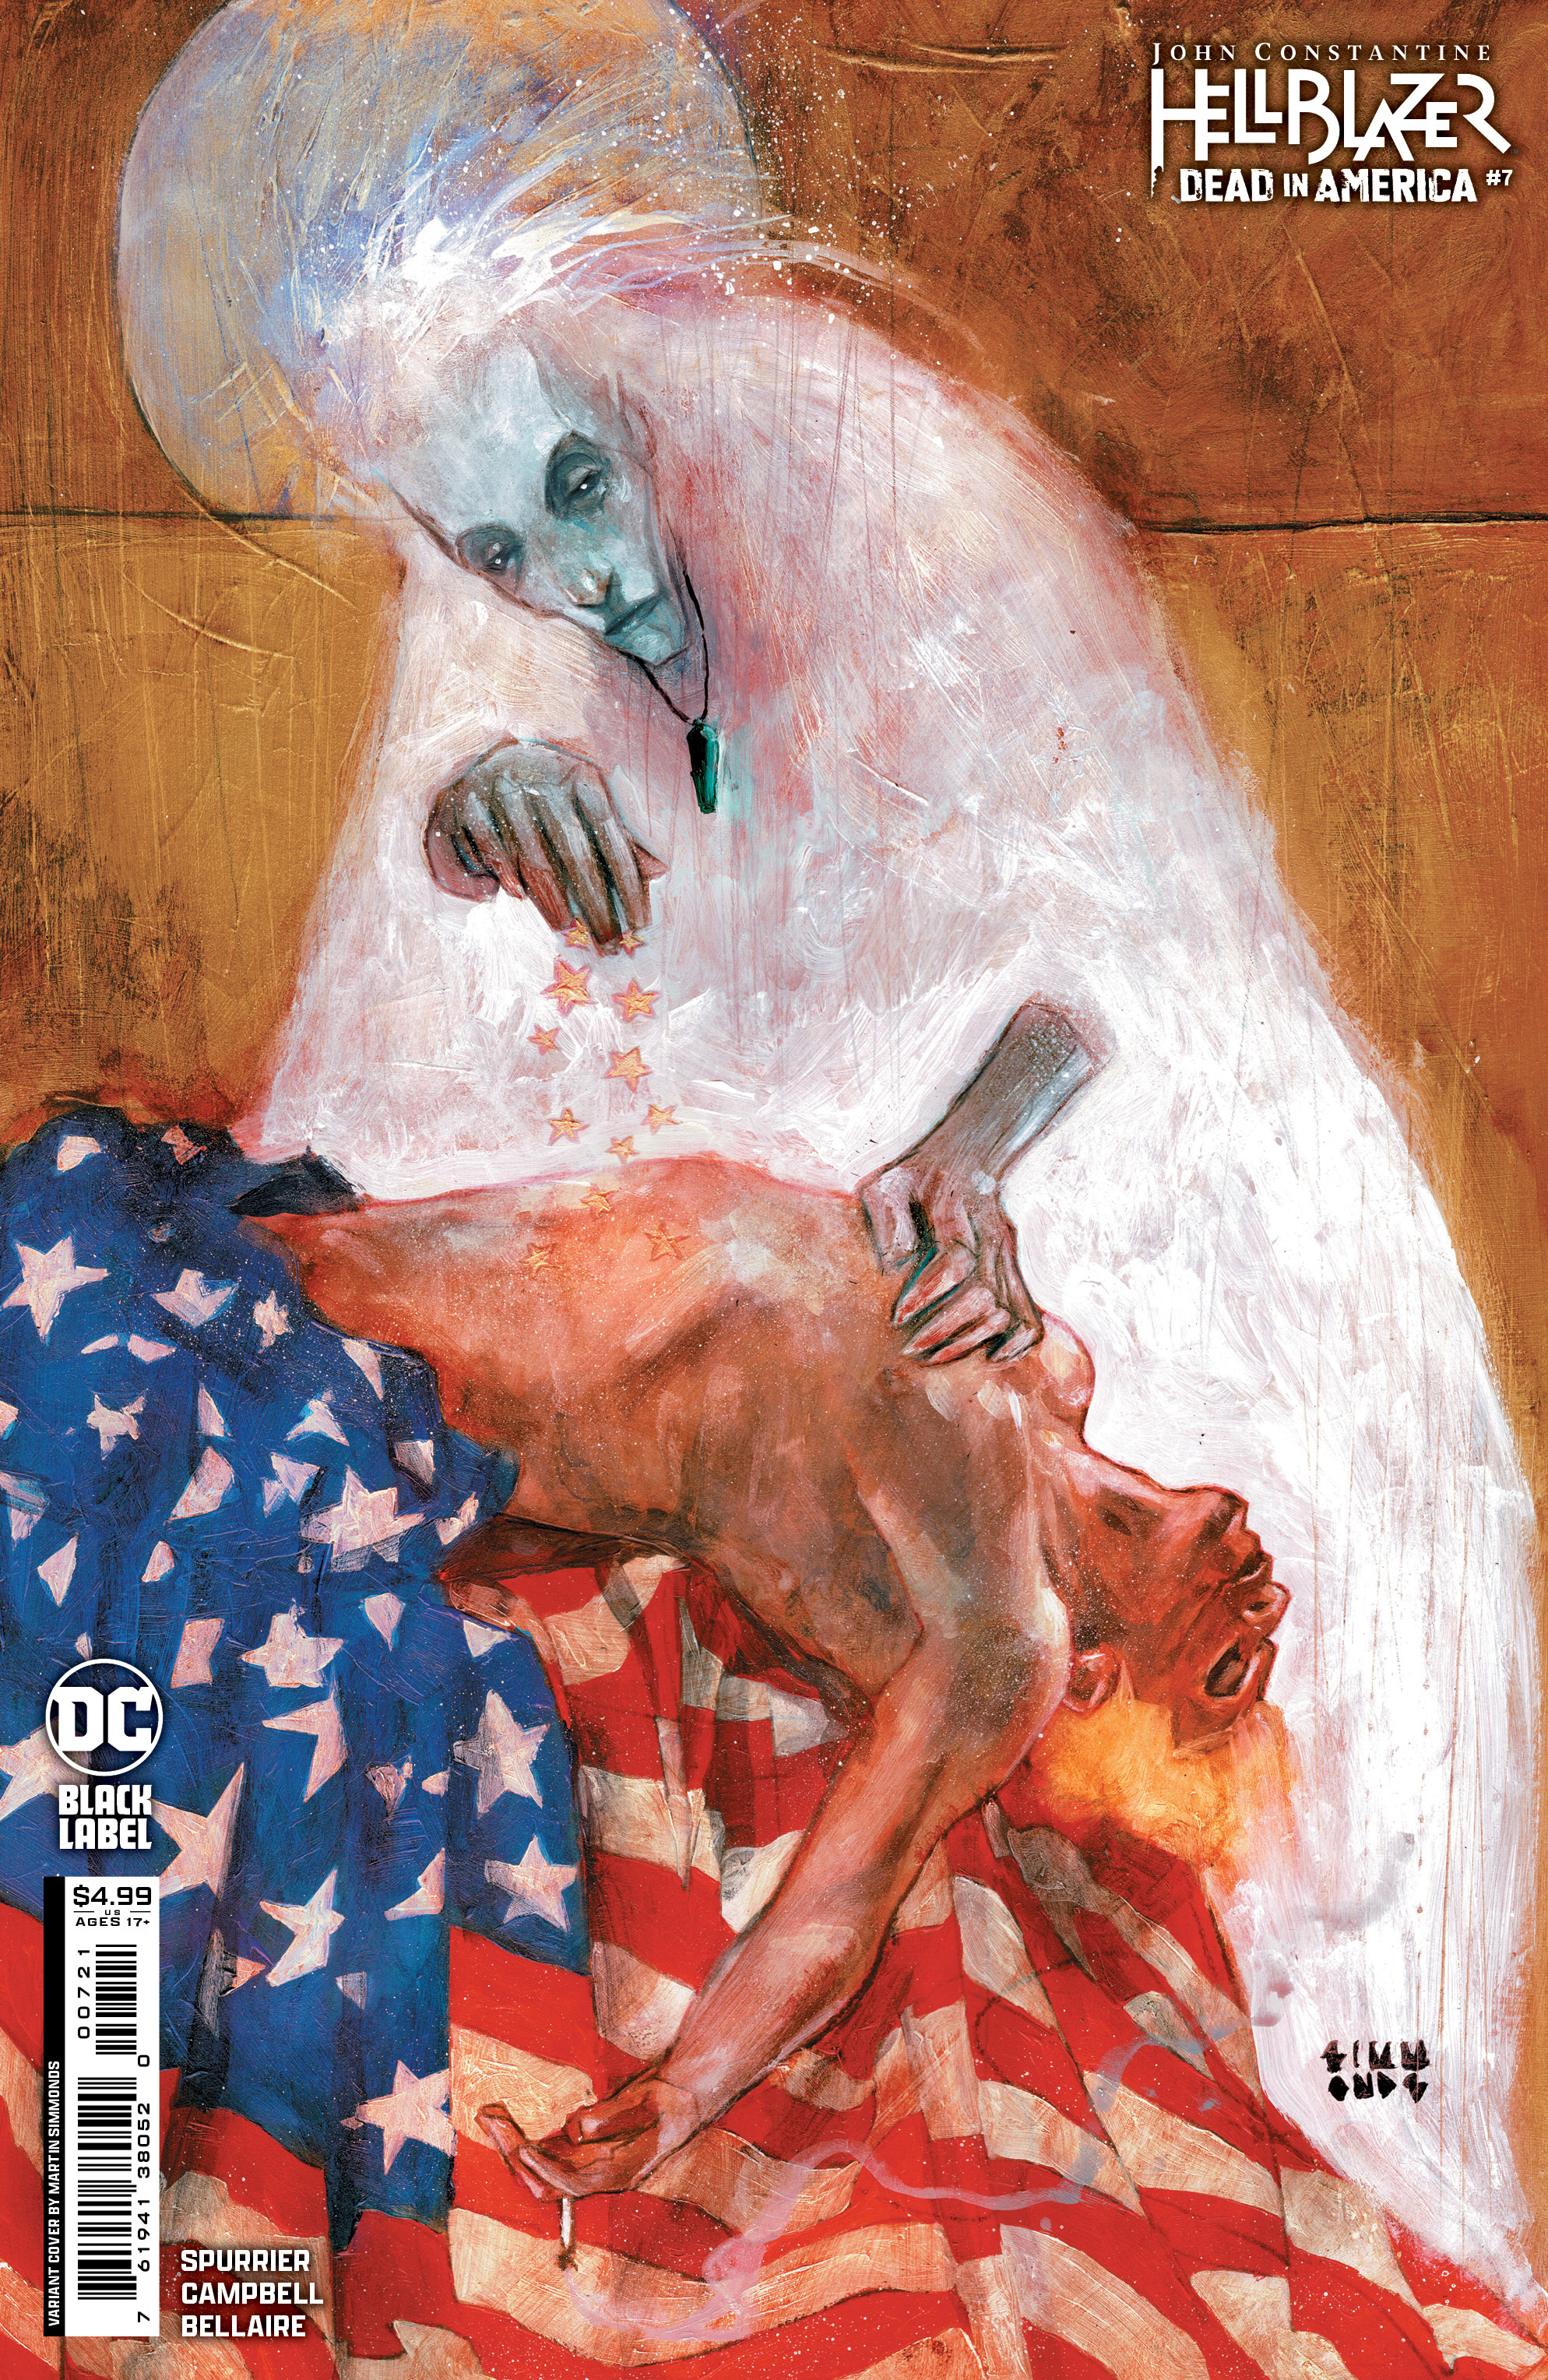 John Constantine, Hellblazer Dead in America #7 (Of 11) Cover B Martin Simmonds Variant (Mature)